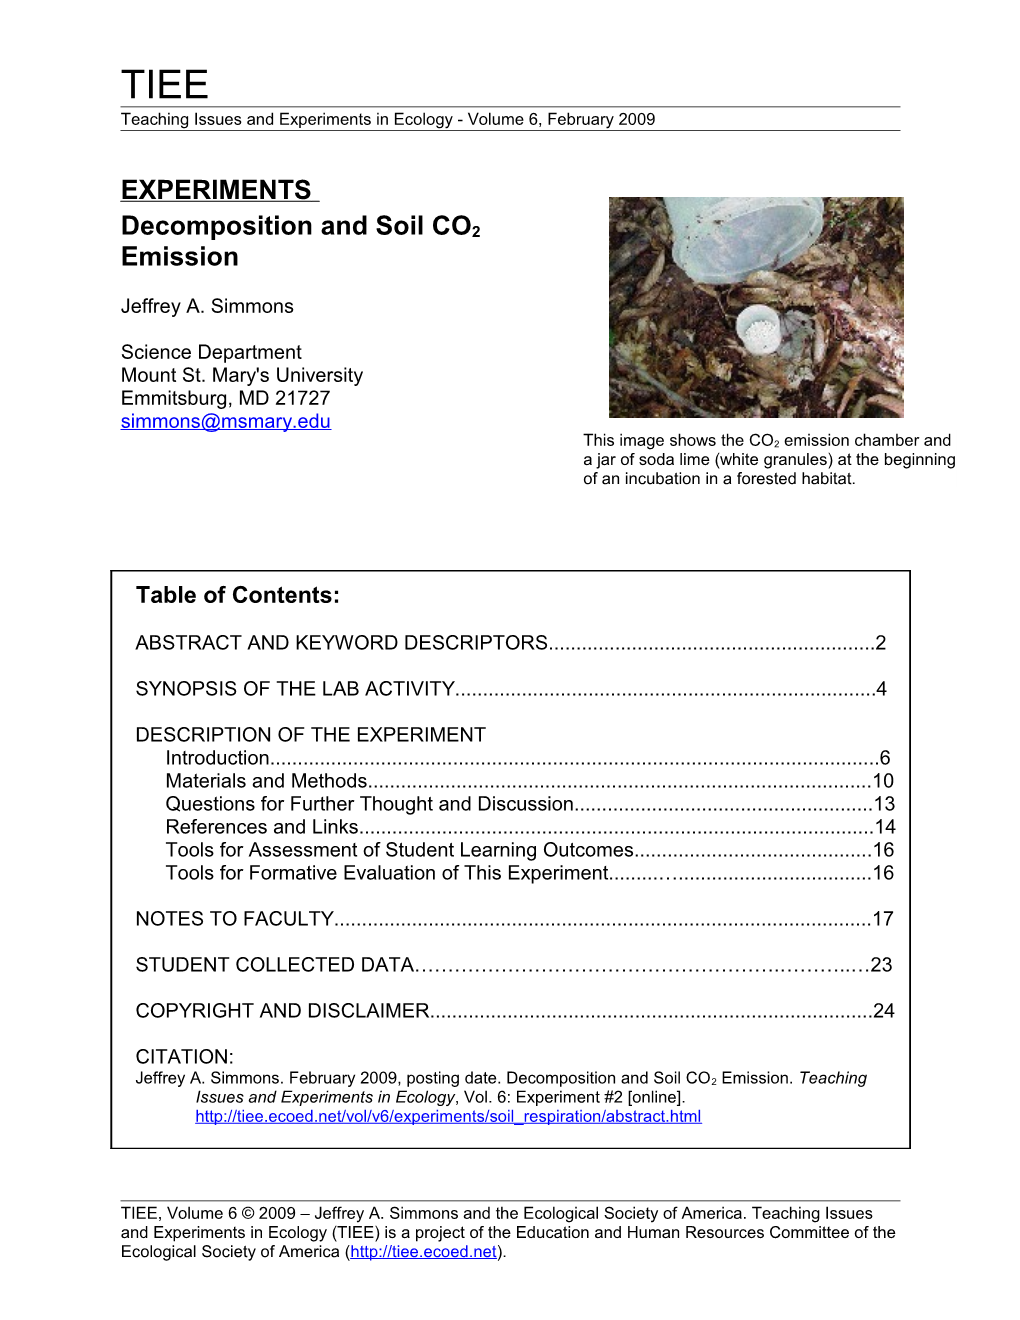 Decomposition and Soil CO2 Emission